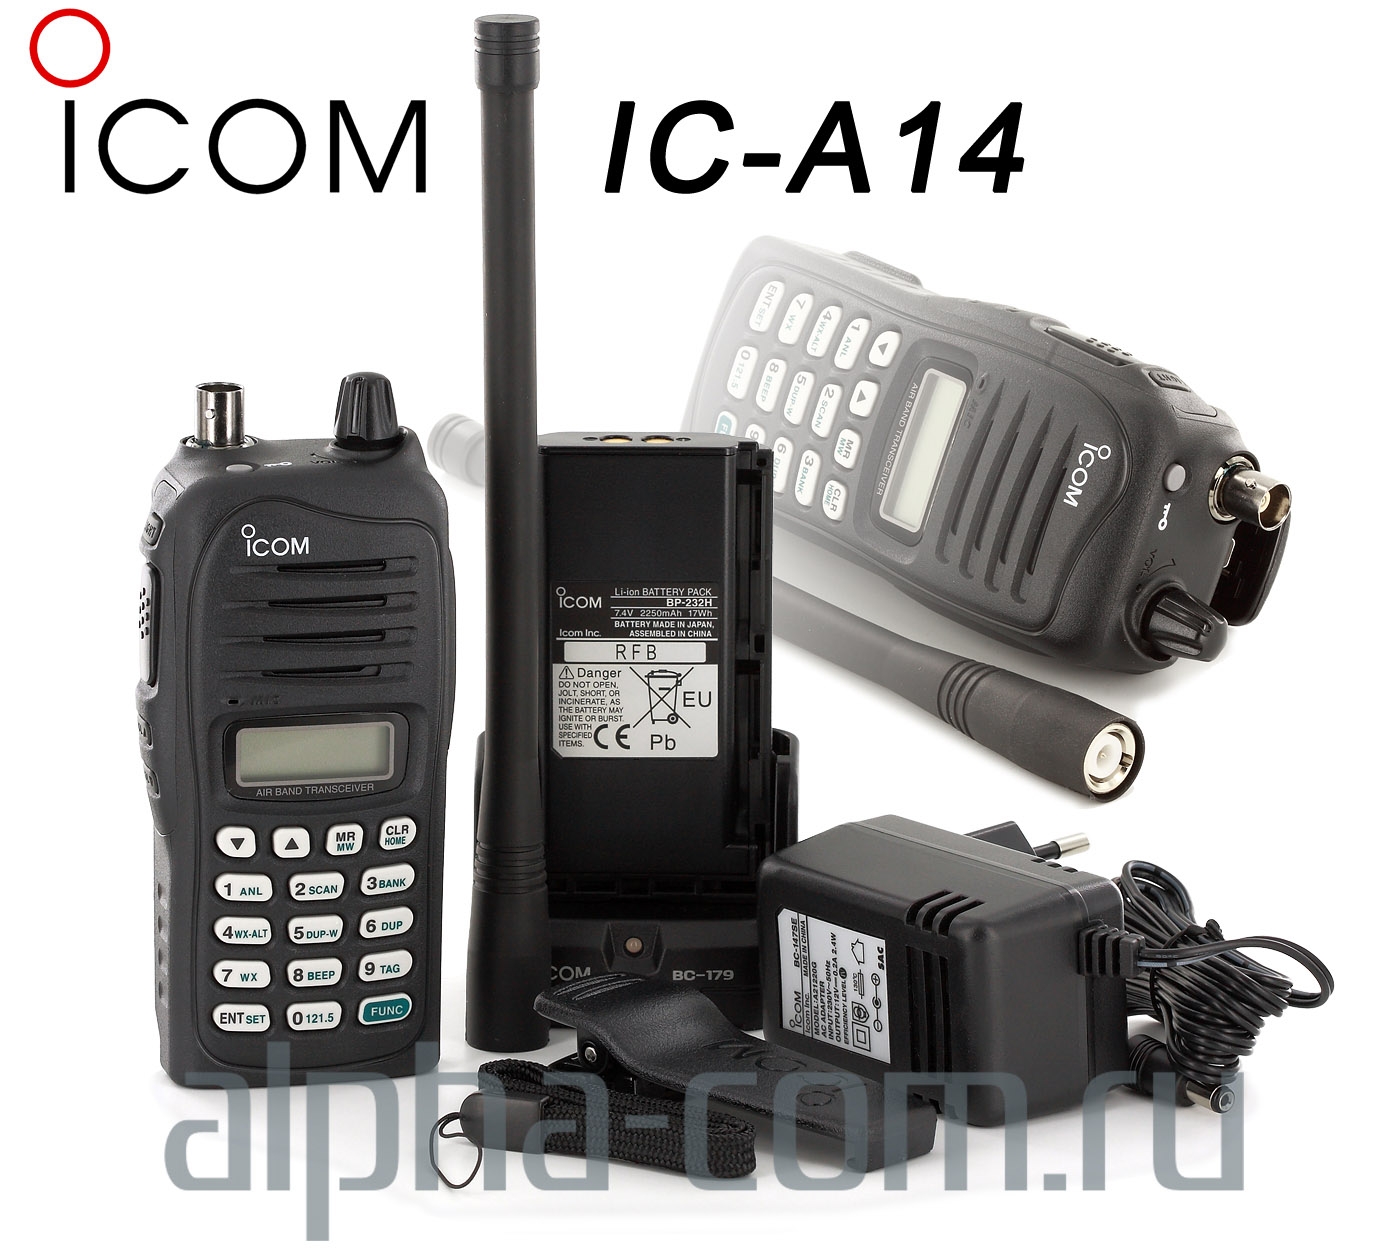 Noticias de última hora Capilla microondas Icom IC-A14 Авиационная радиостанция| ICA14 Цена